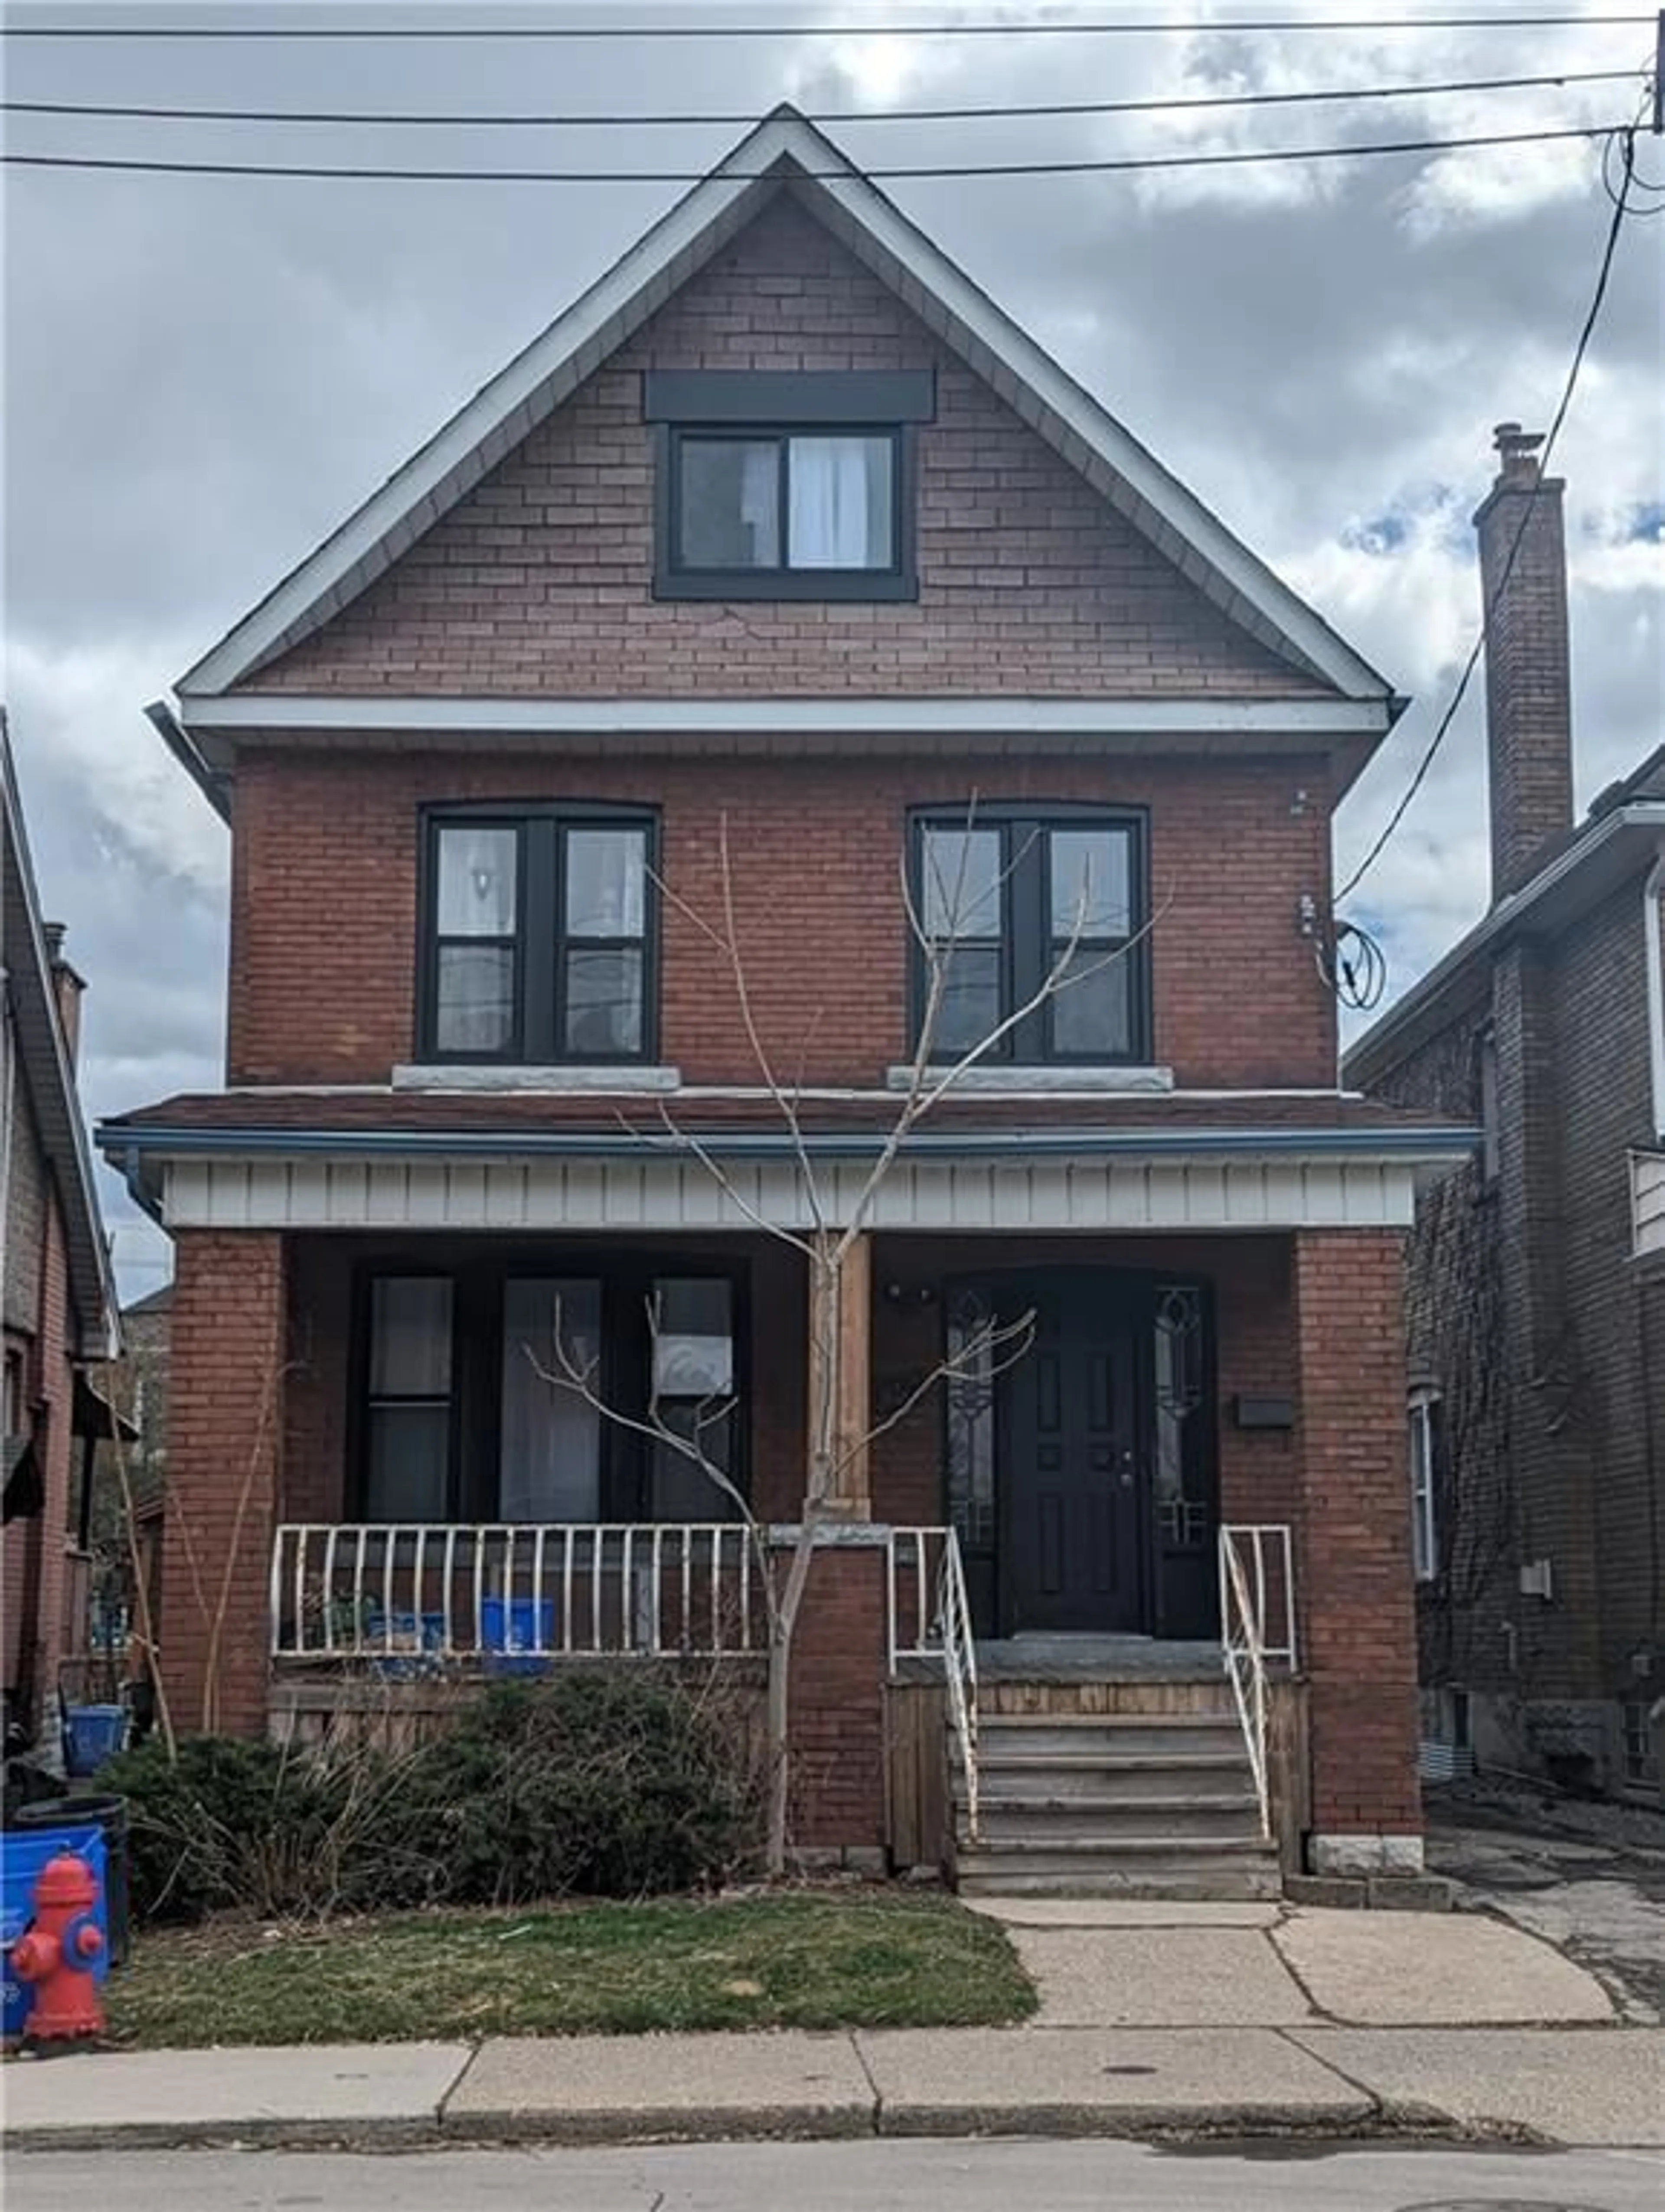 Home with brick exterior material for 22 LOTTRIDGE St, Hamilton Ontario L8L 6T5